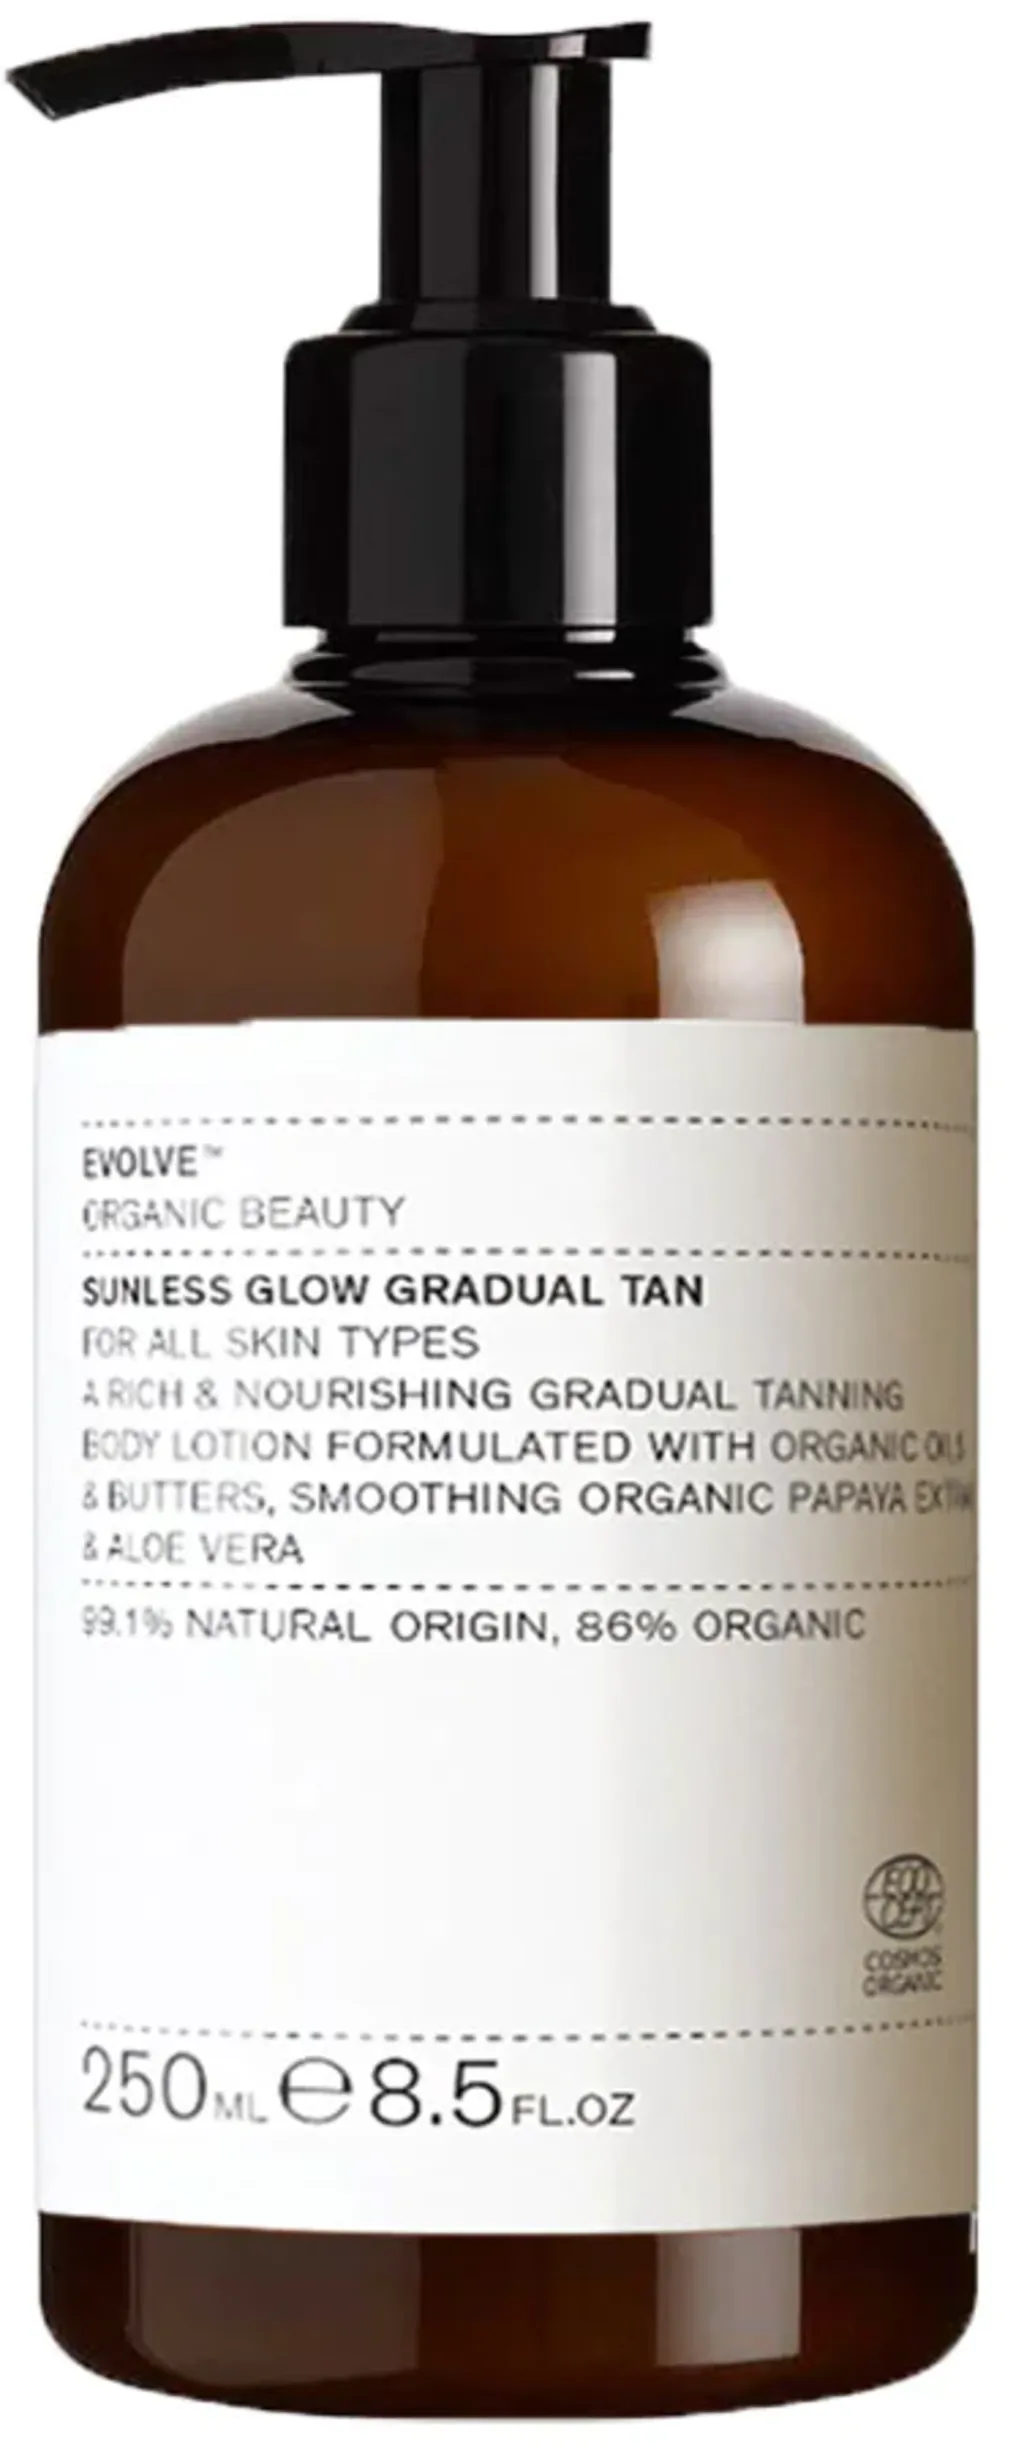 Evolve Organic Beauty Sunless Glow Gradual Tan - 250 ml